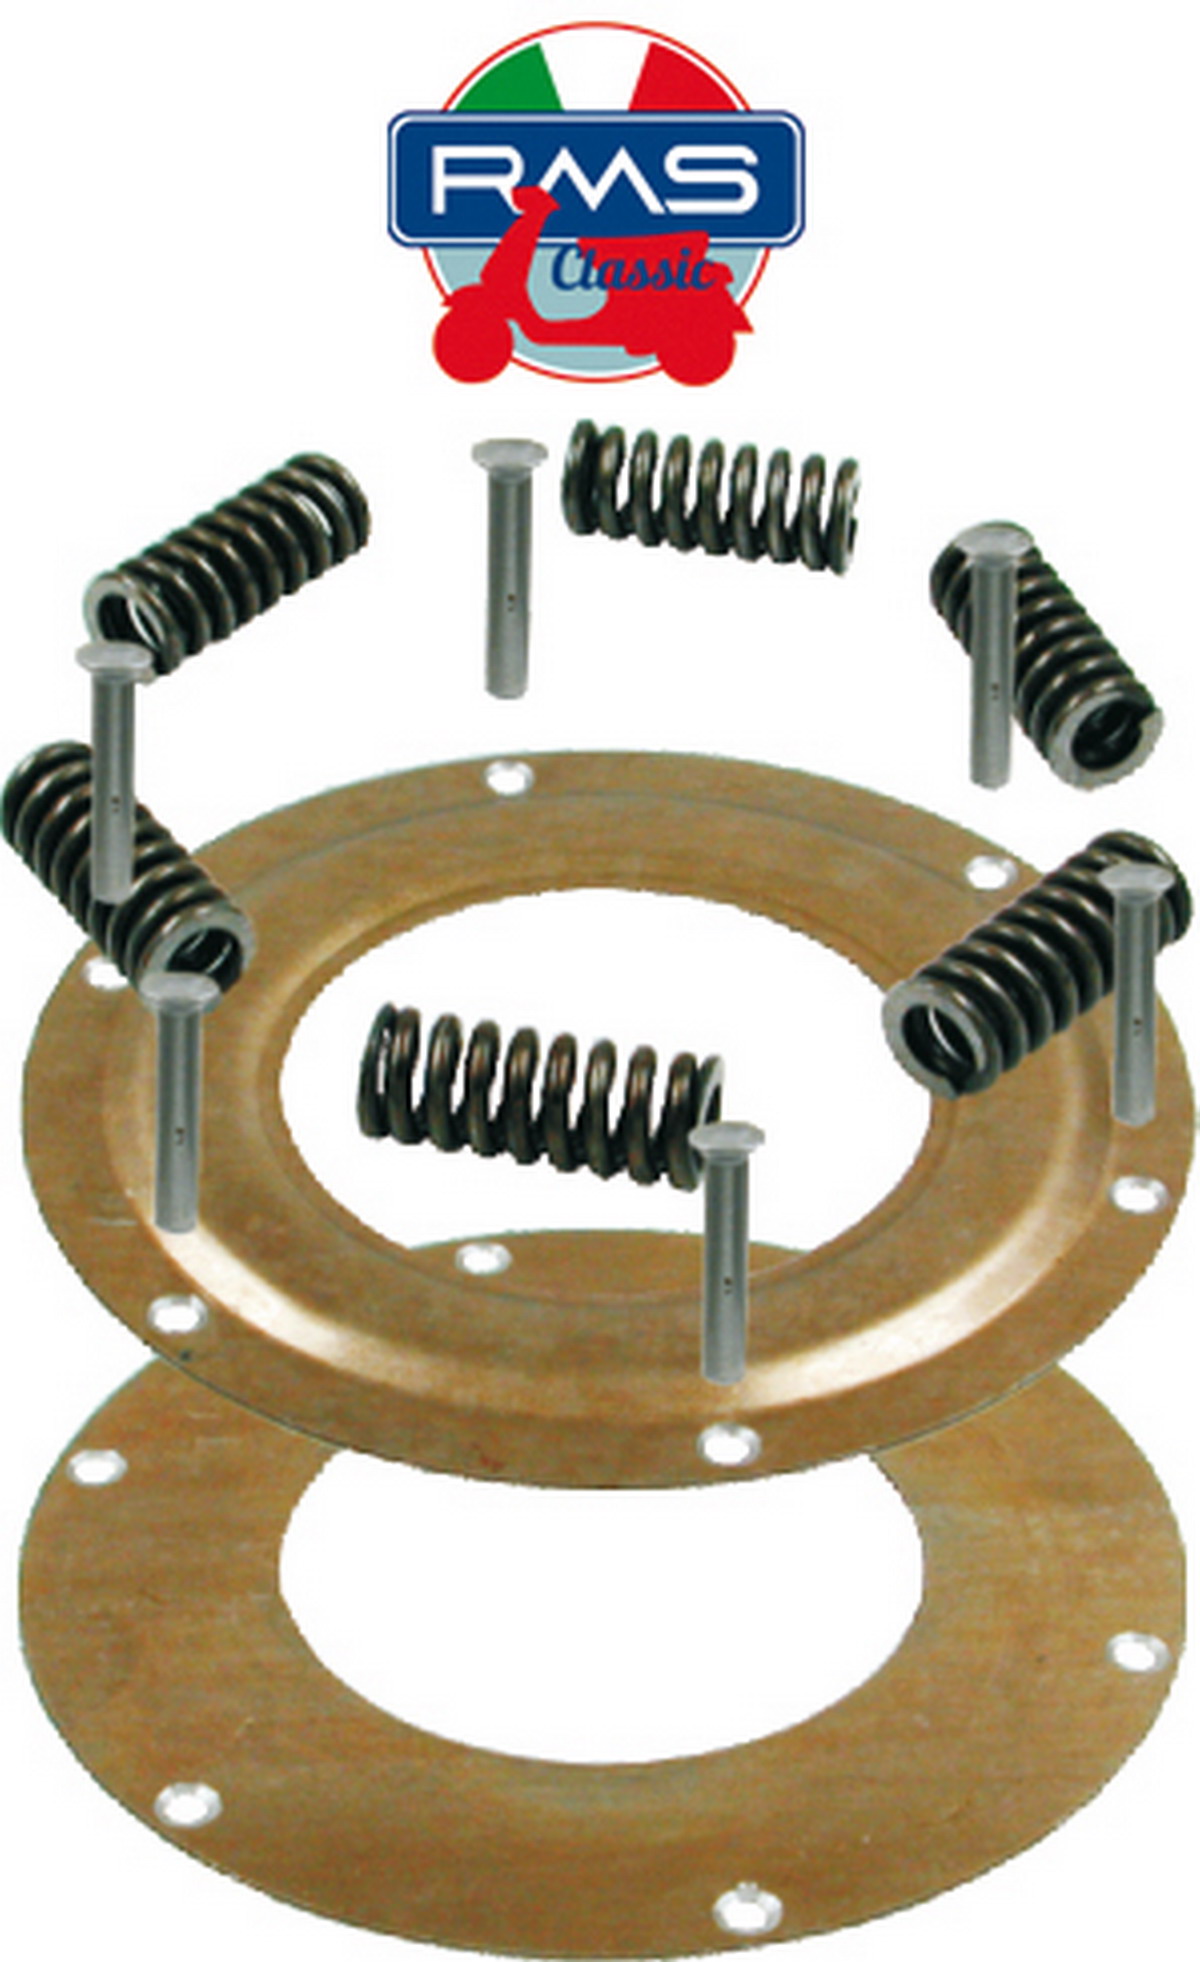 Obrázek produktu Primary drive shock absorber spring kit RMS 100300060